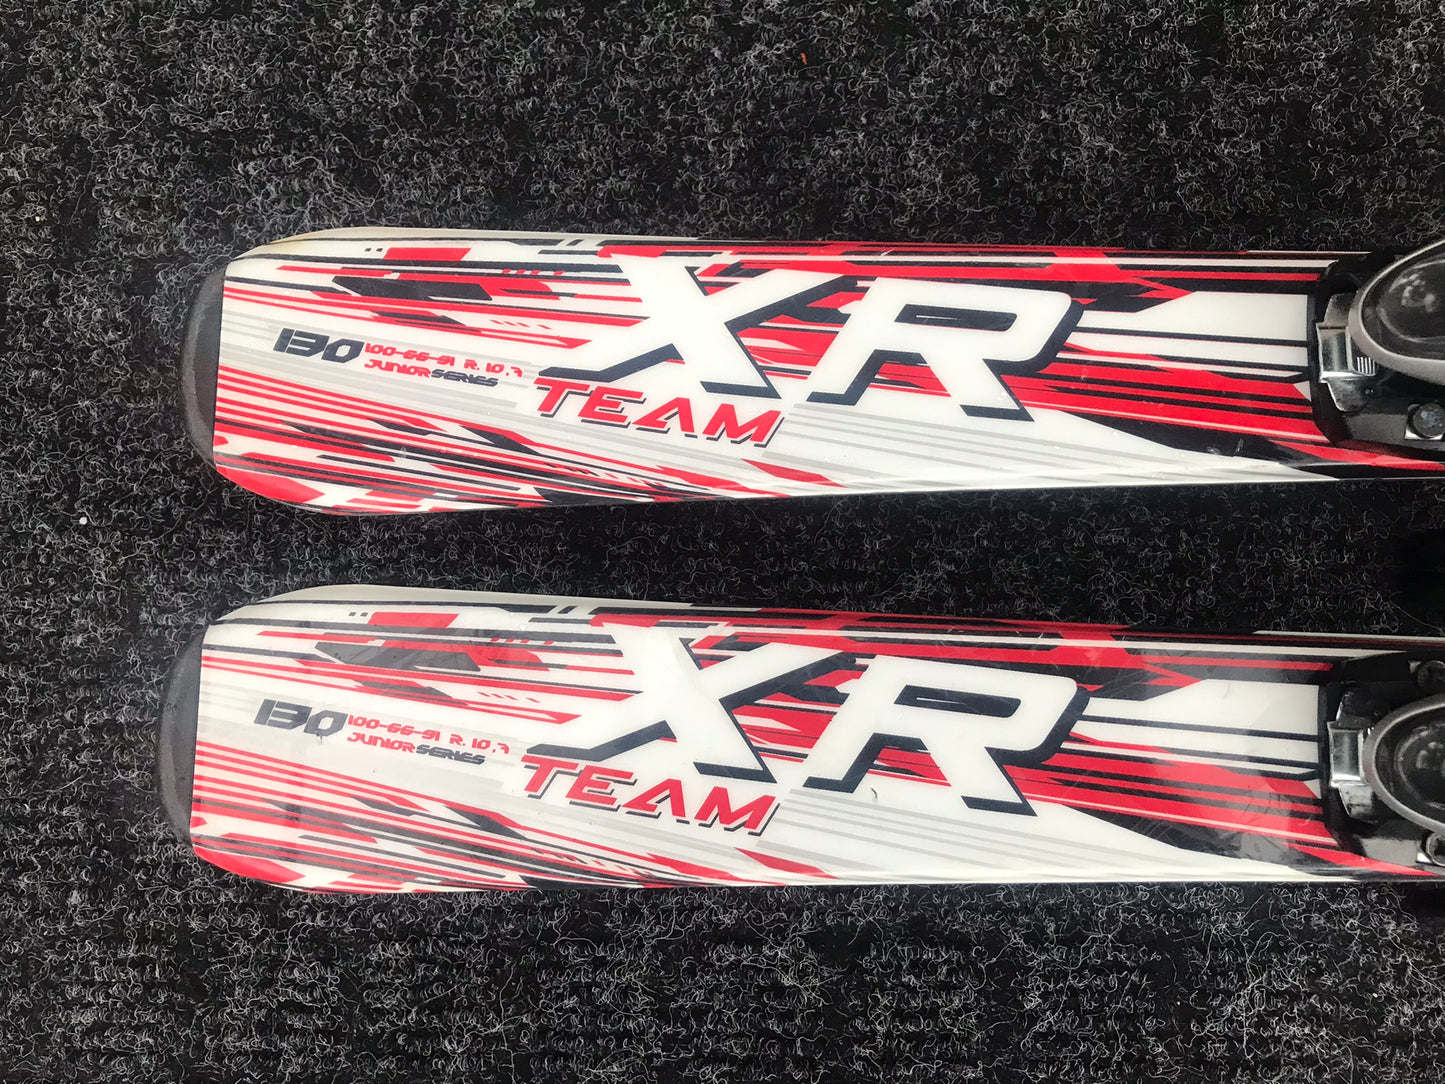 Ski 130 Tecno Pro XR Team White Black Red Parabolic With Bindings